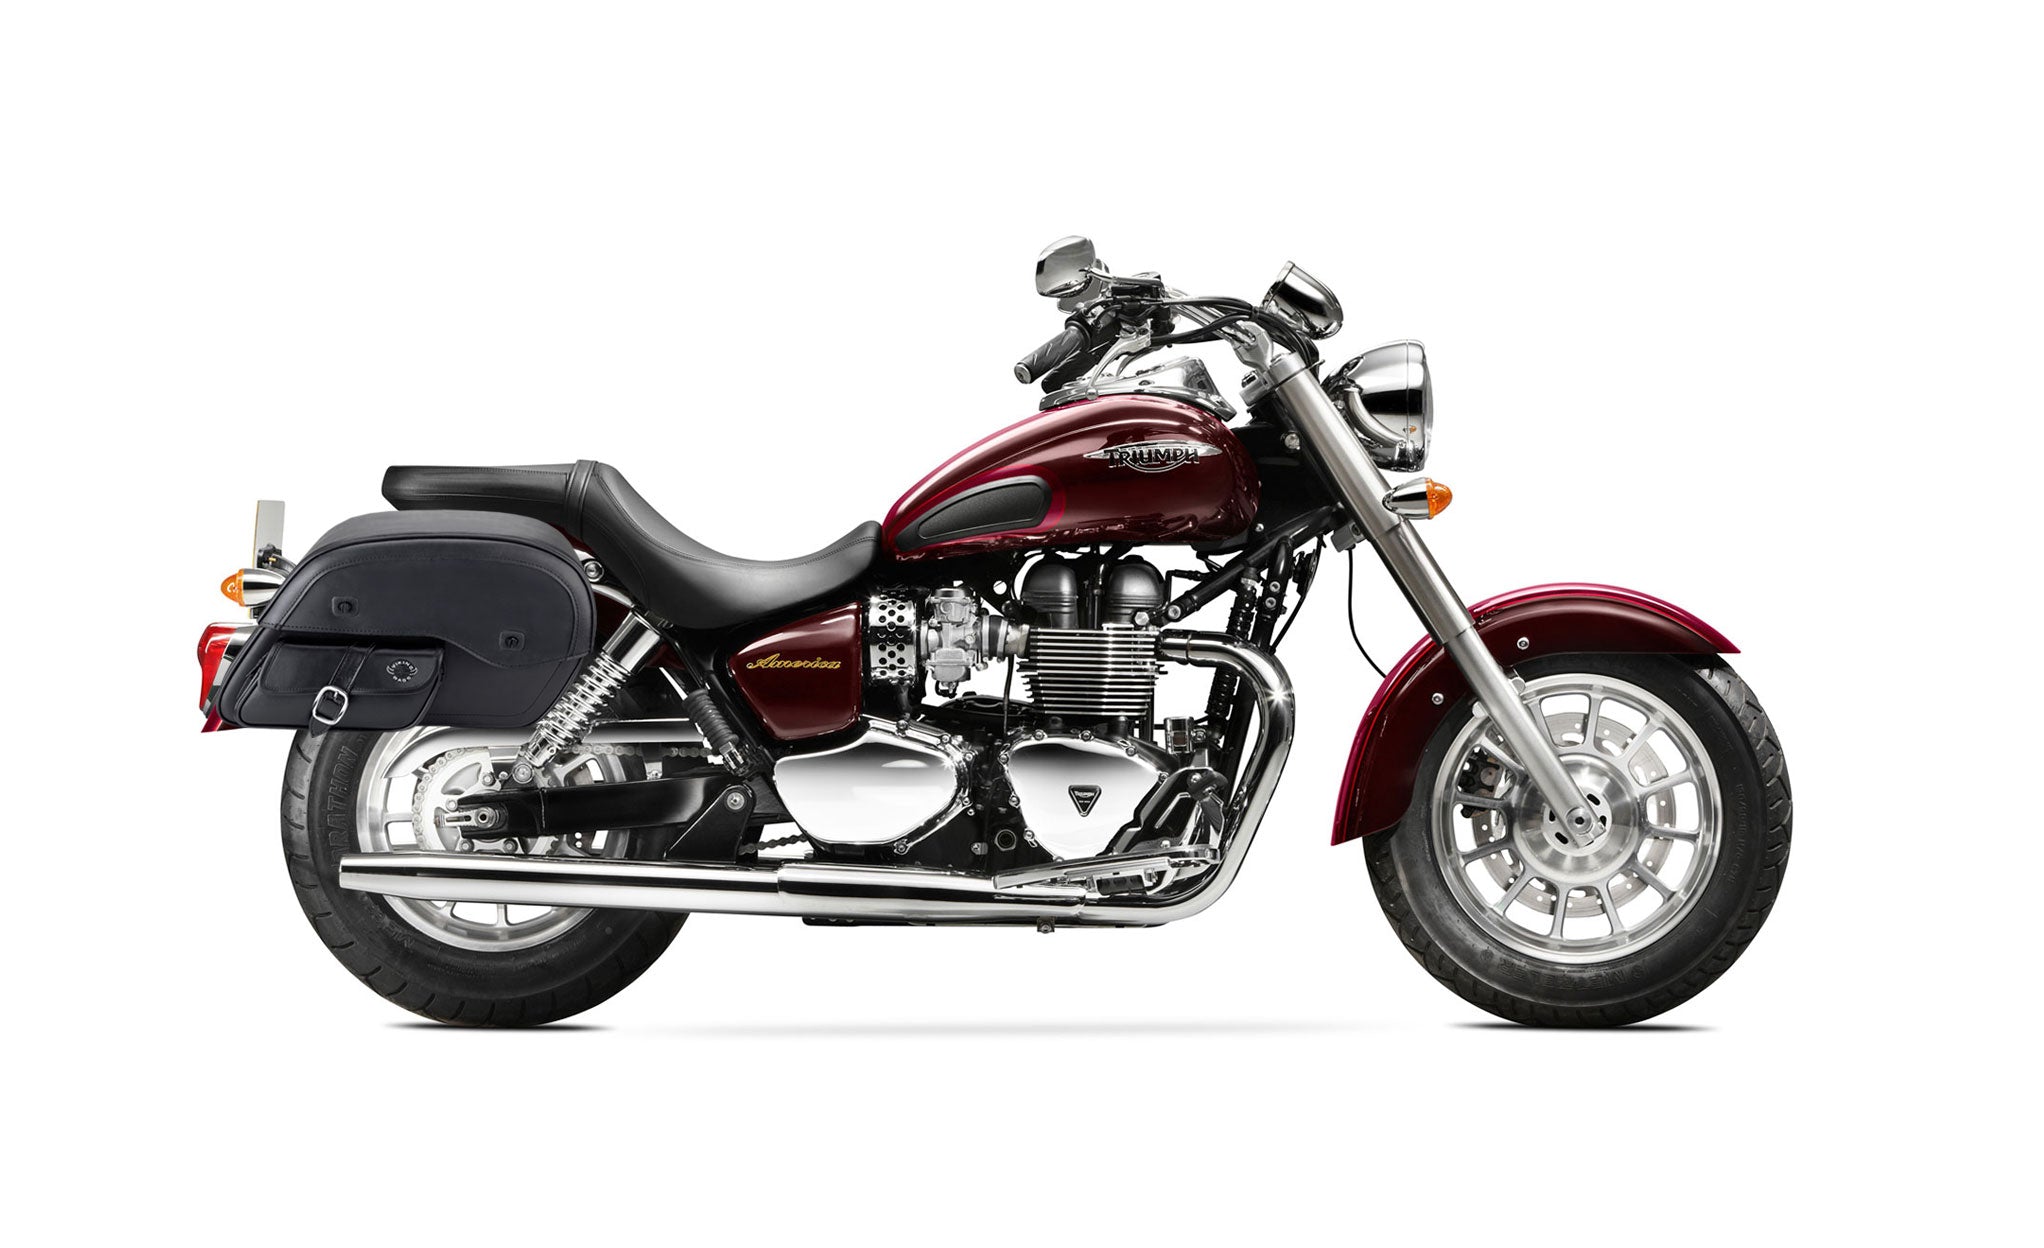 Viking Dweller Side Pocket Large Triumph America Leather Motorcycle Saddlebags on Bike Photo @expand